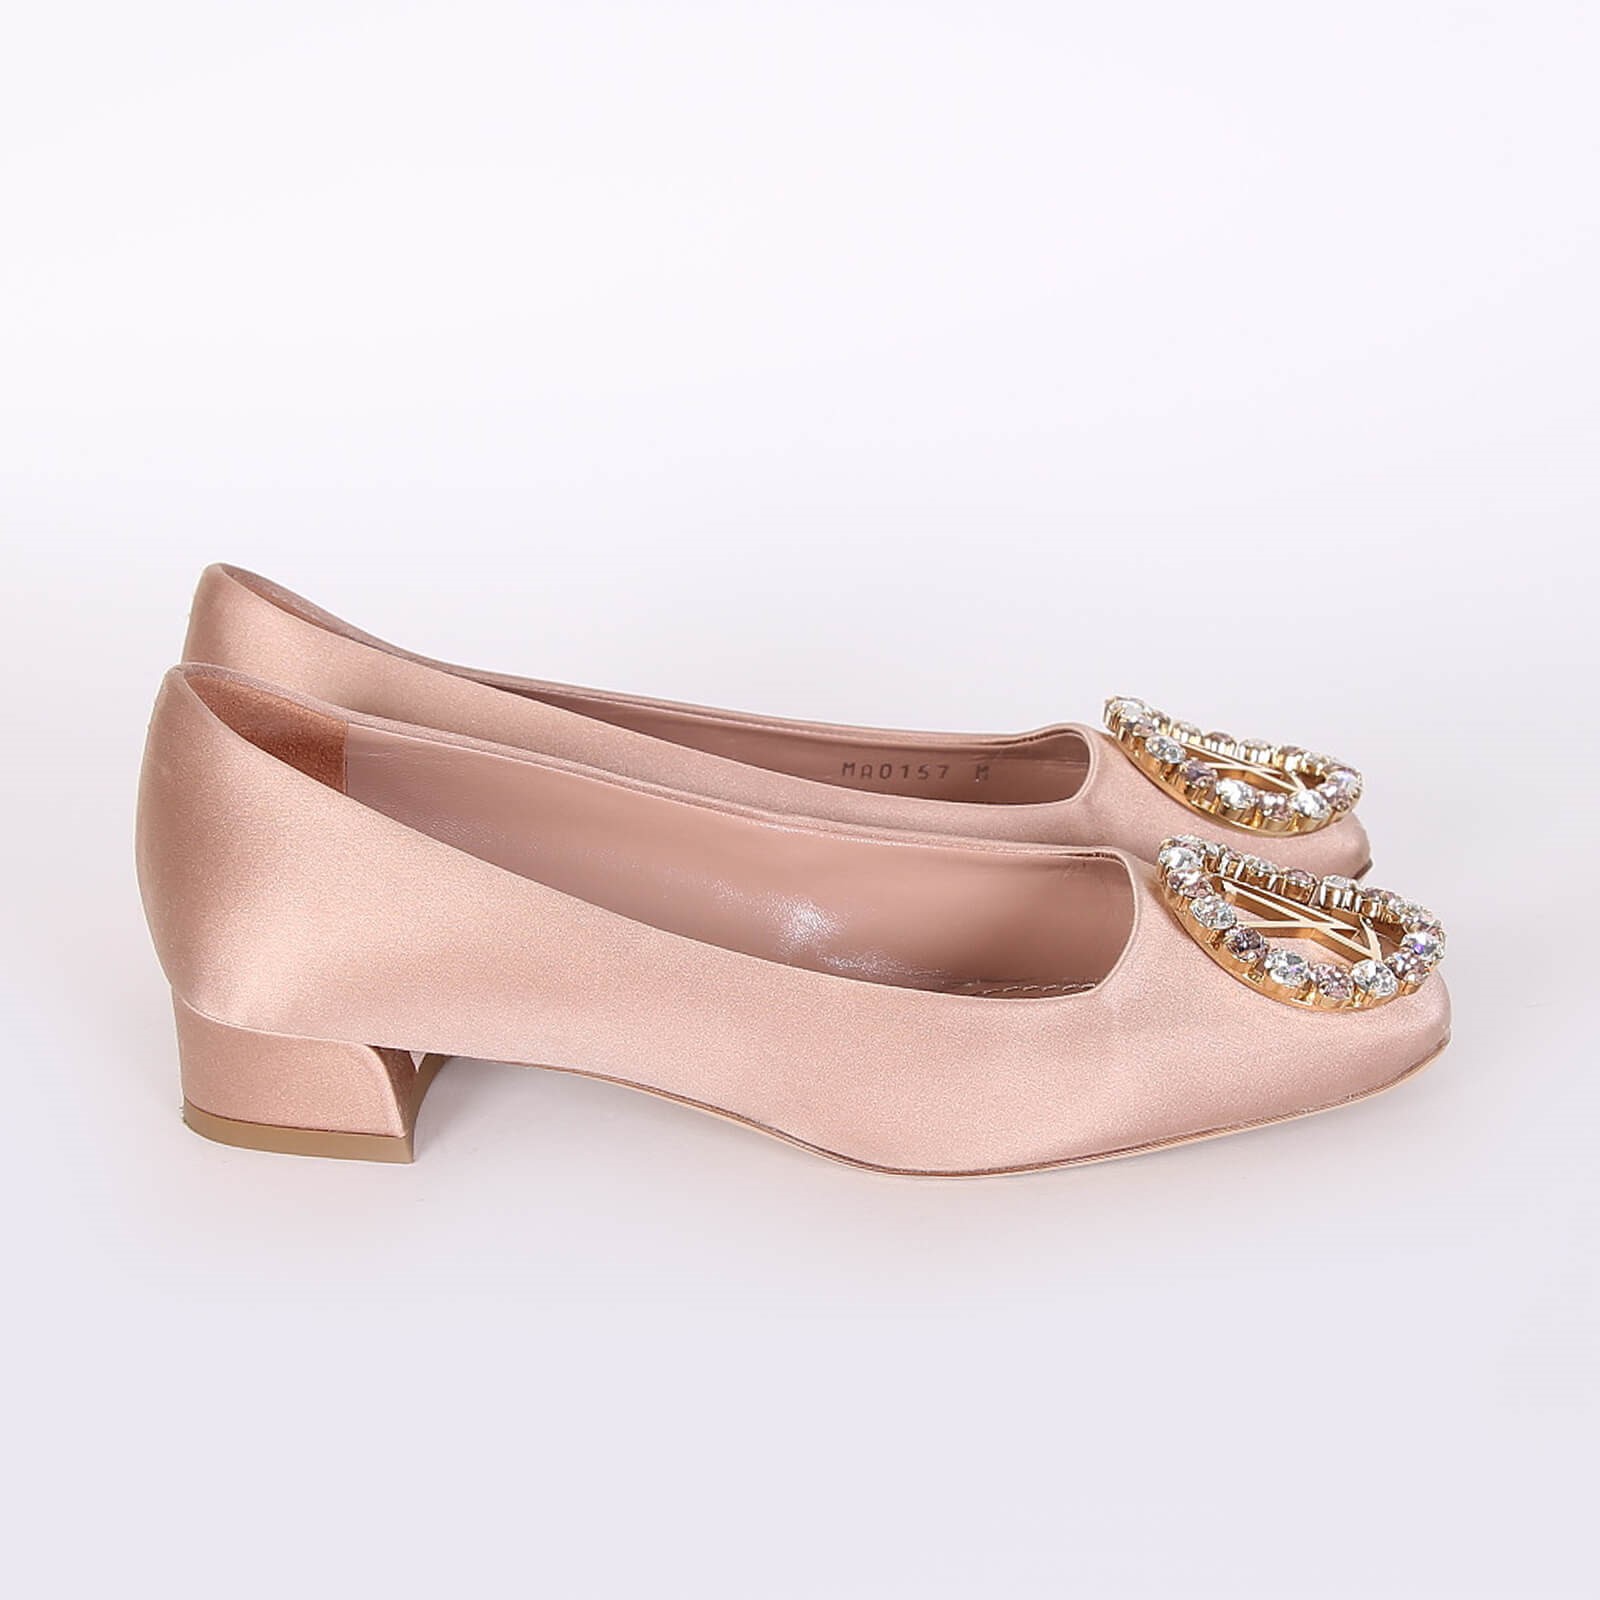 Madeleine cloth heels Louis Vuitton Brown size 38.5 EU in Cloth - 31093467